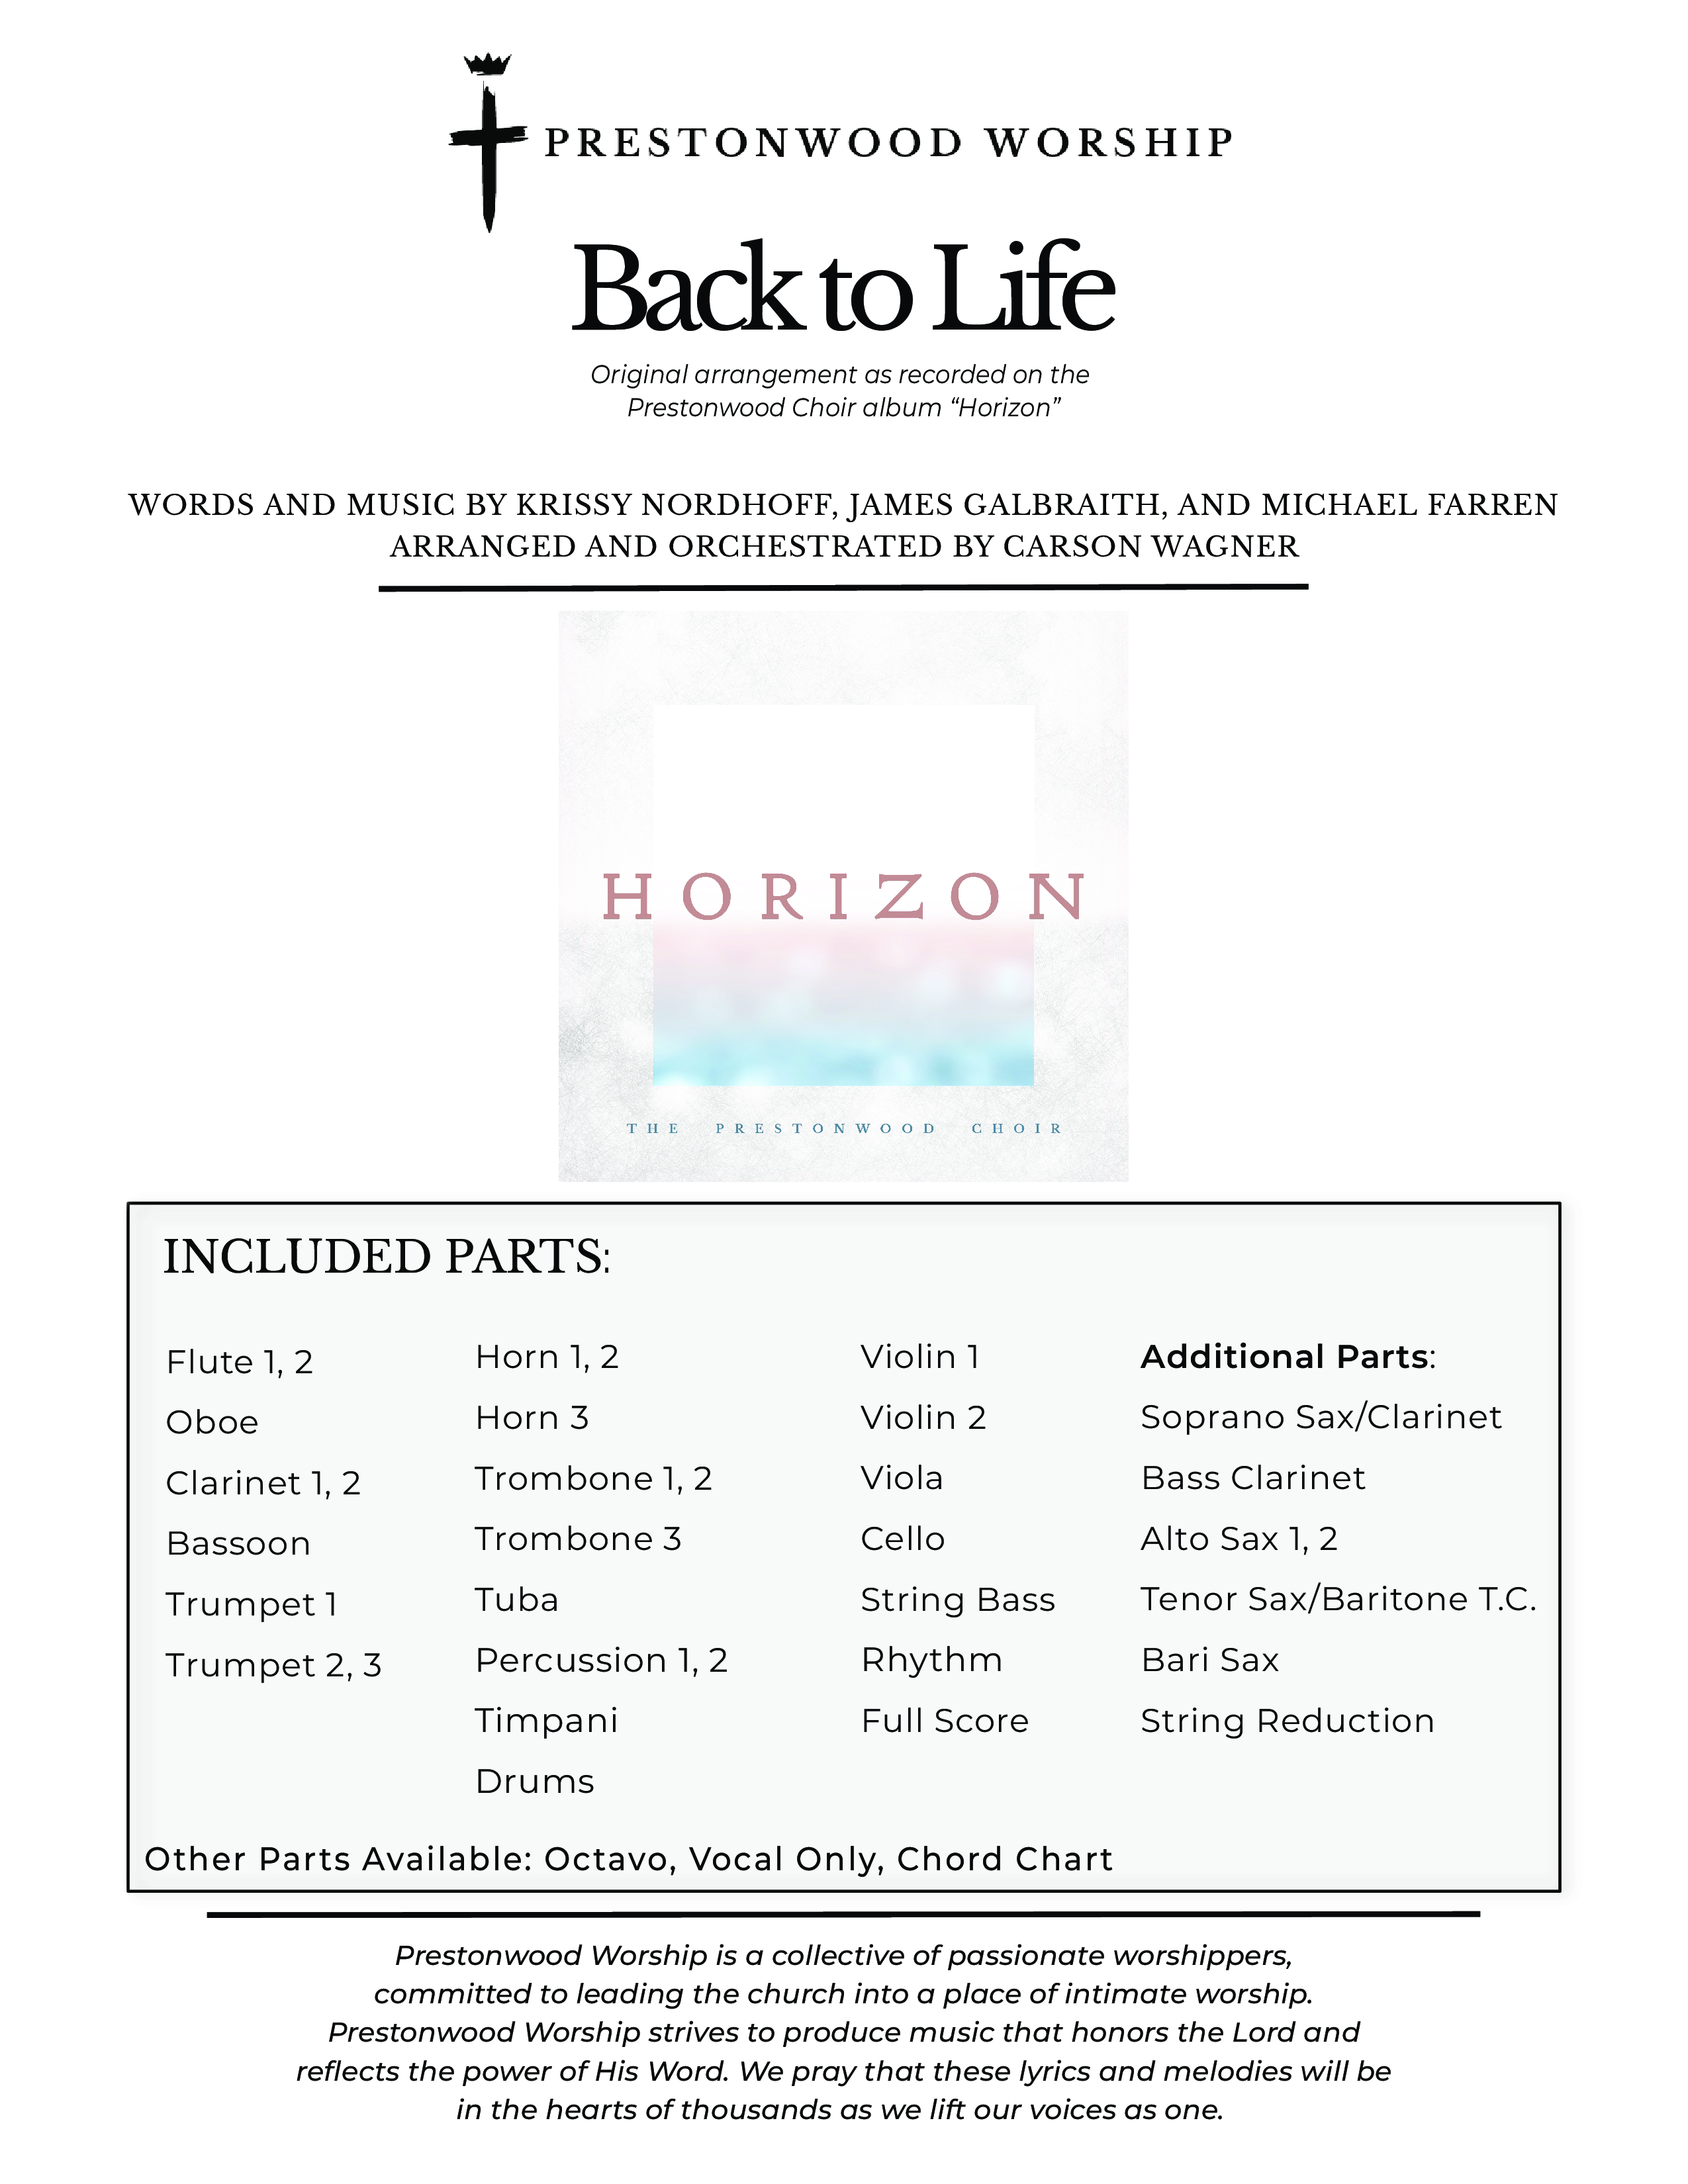 Back To Life (Choral Anthem SATB) Cover Sheet (Prestonwood Worship / Prestonwood Choir / Arr. Carson Wagner)